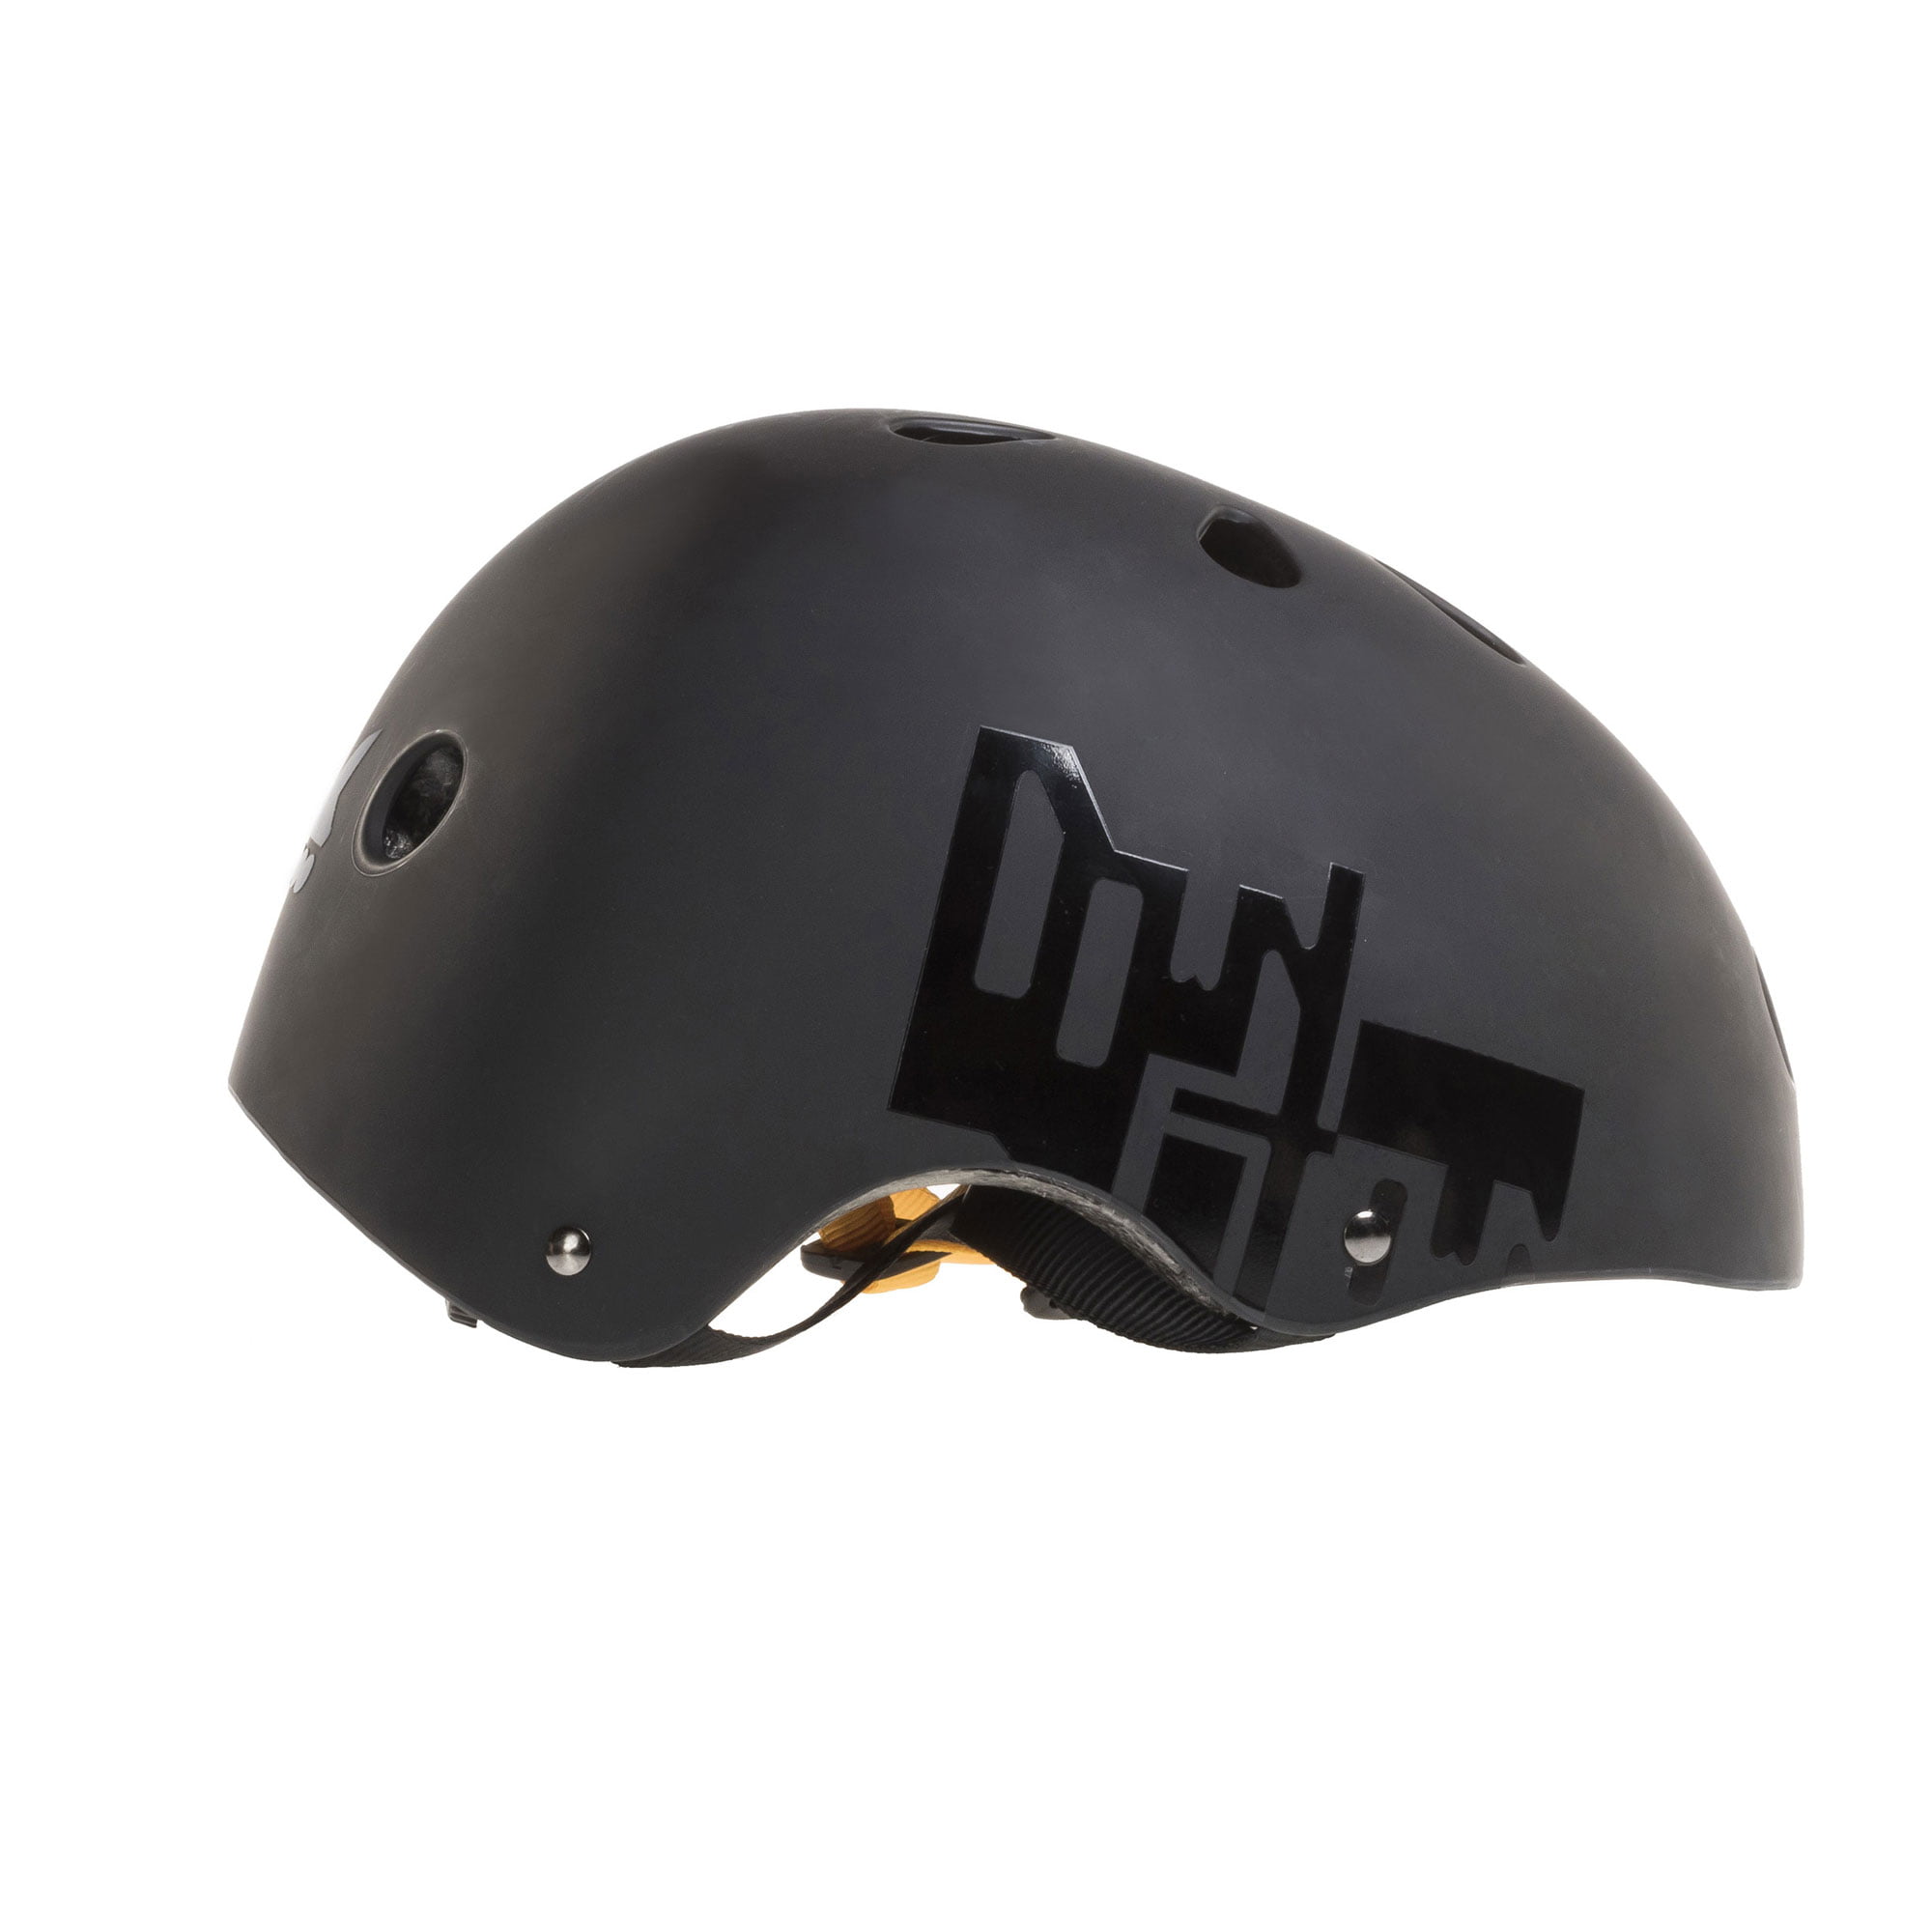 Black Rollerblade USA Downtown Skate Helmet w/ ABS Shell & 11 VentsLarge 